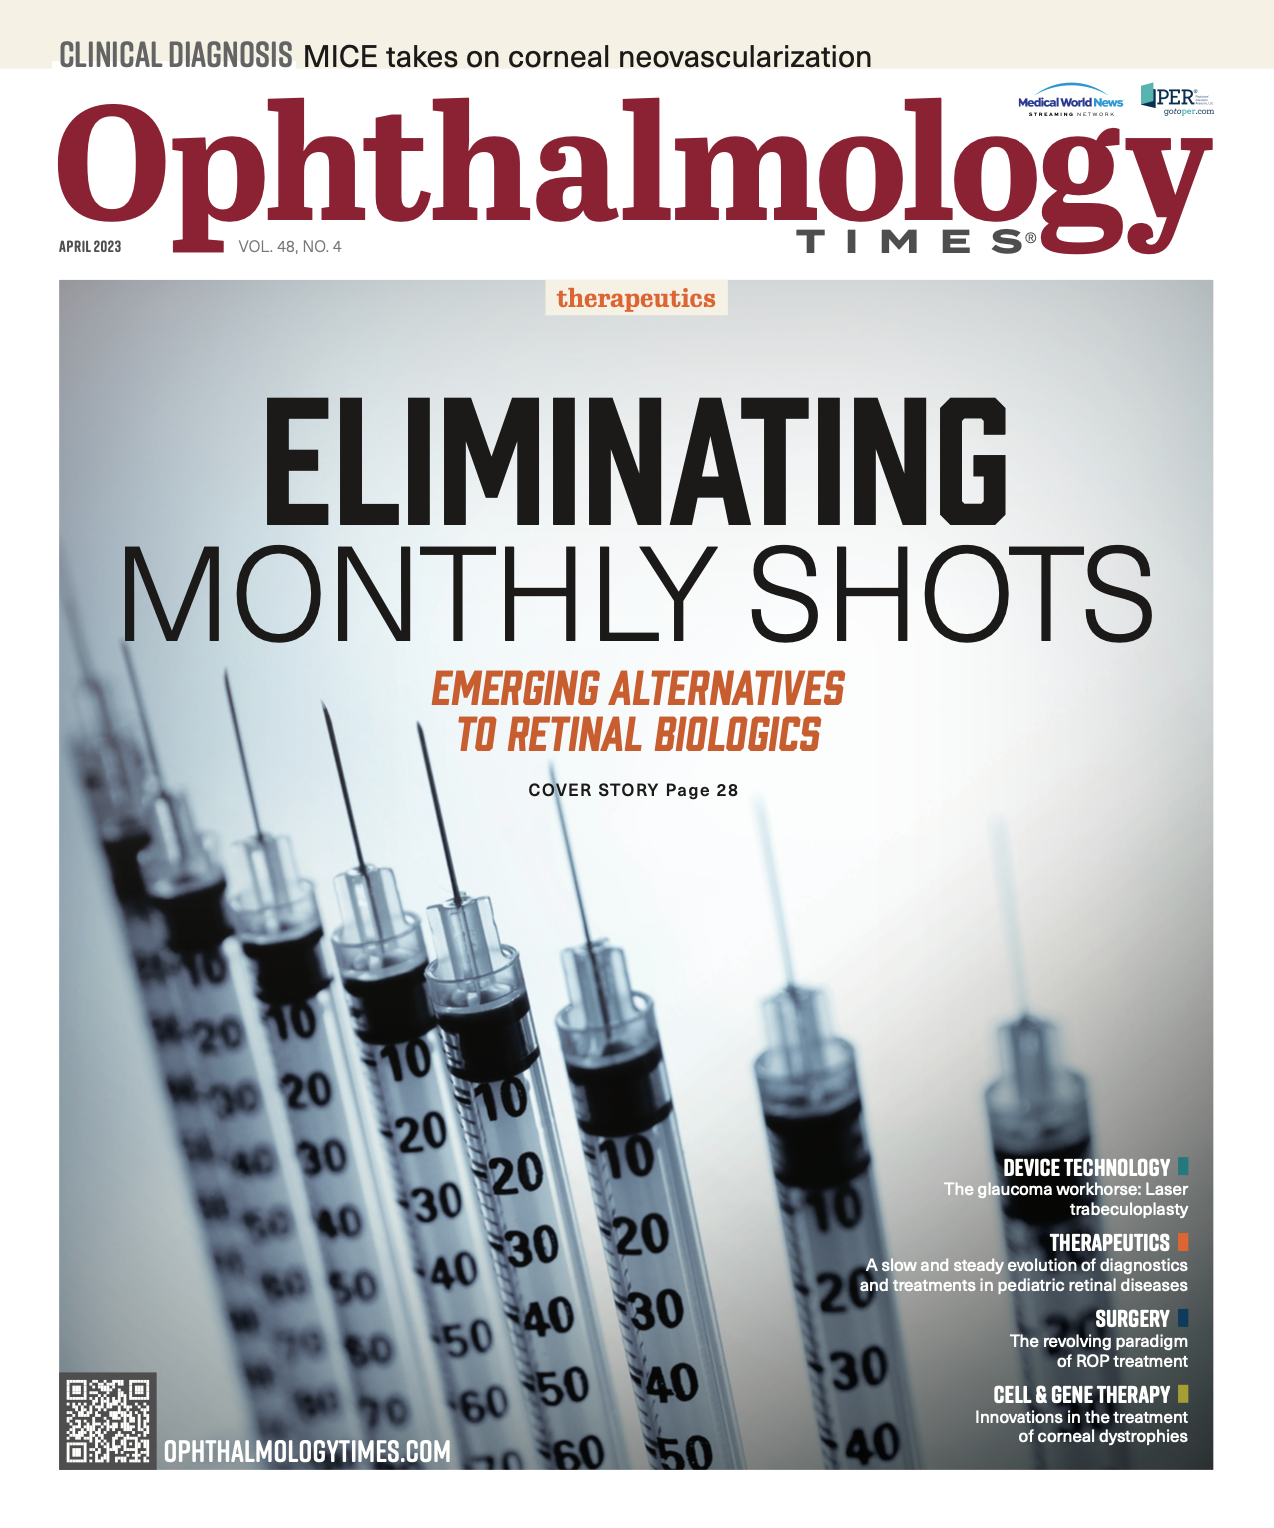 Ophthalmology Times: April 2023